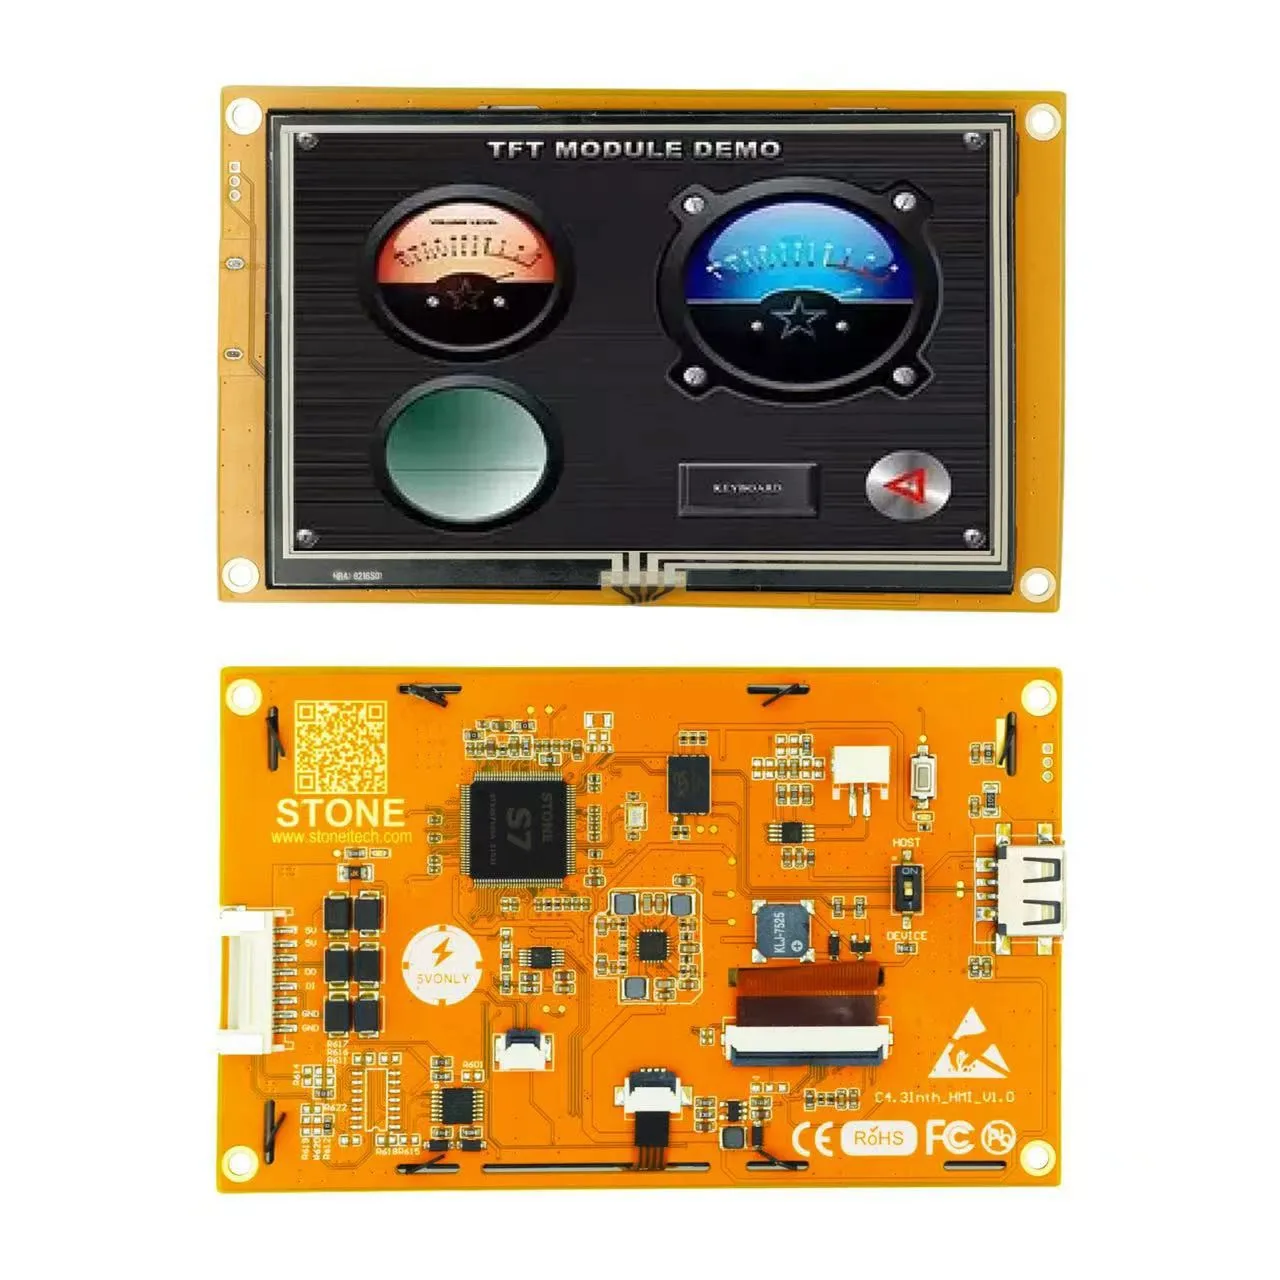 Stone 4.3Inch TFT LCD Module Includes processor, control program, driver, flash memory, RS232/ TTL port, Wi-Fi / Bluetooth,